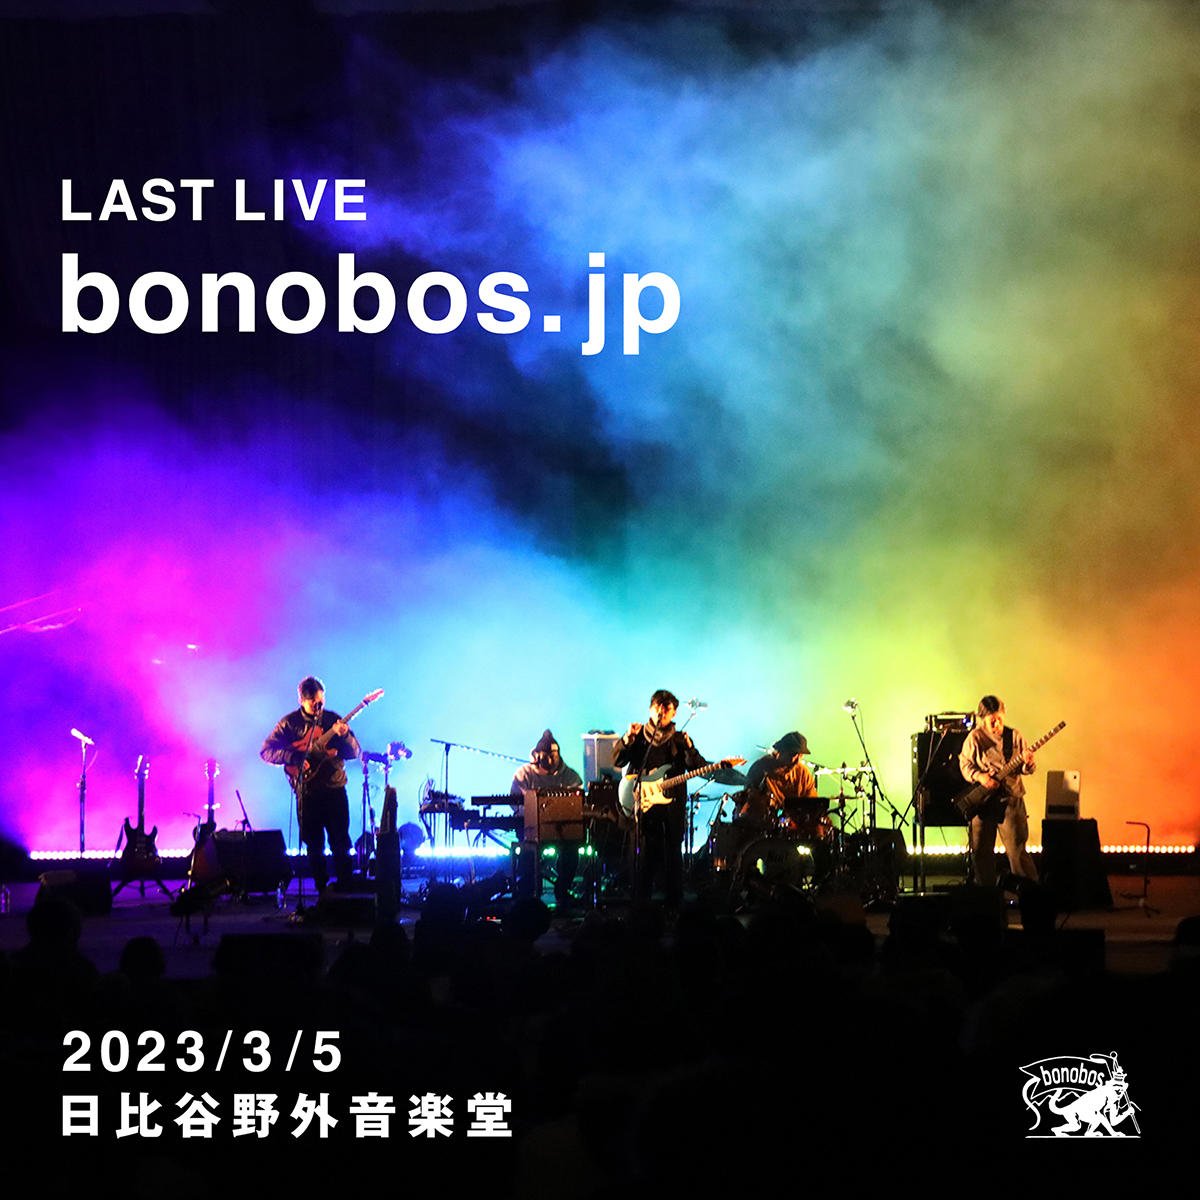 『bonobos LAST LIVE 「bonobos.jp」 2023/3/5 日比谷野外音楽堂』